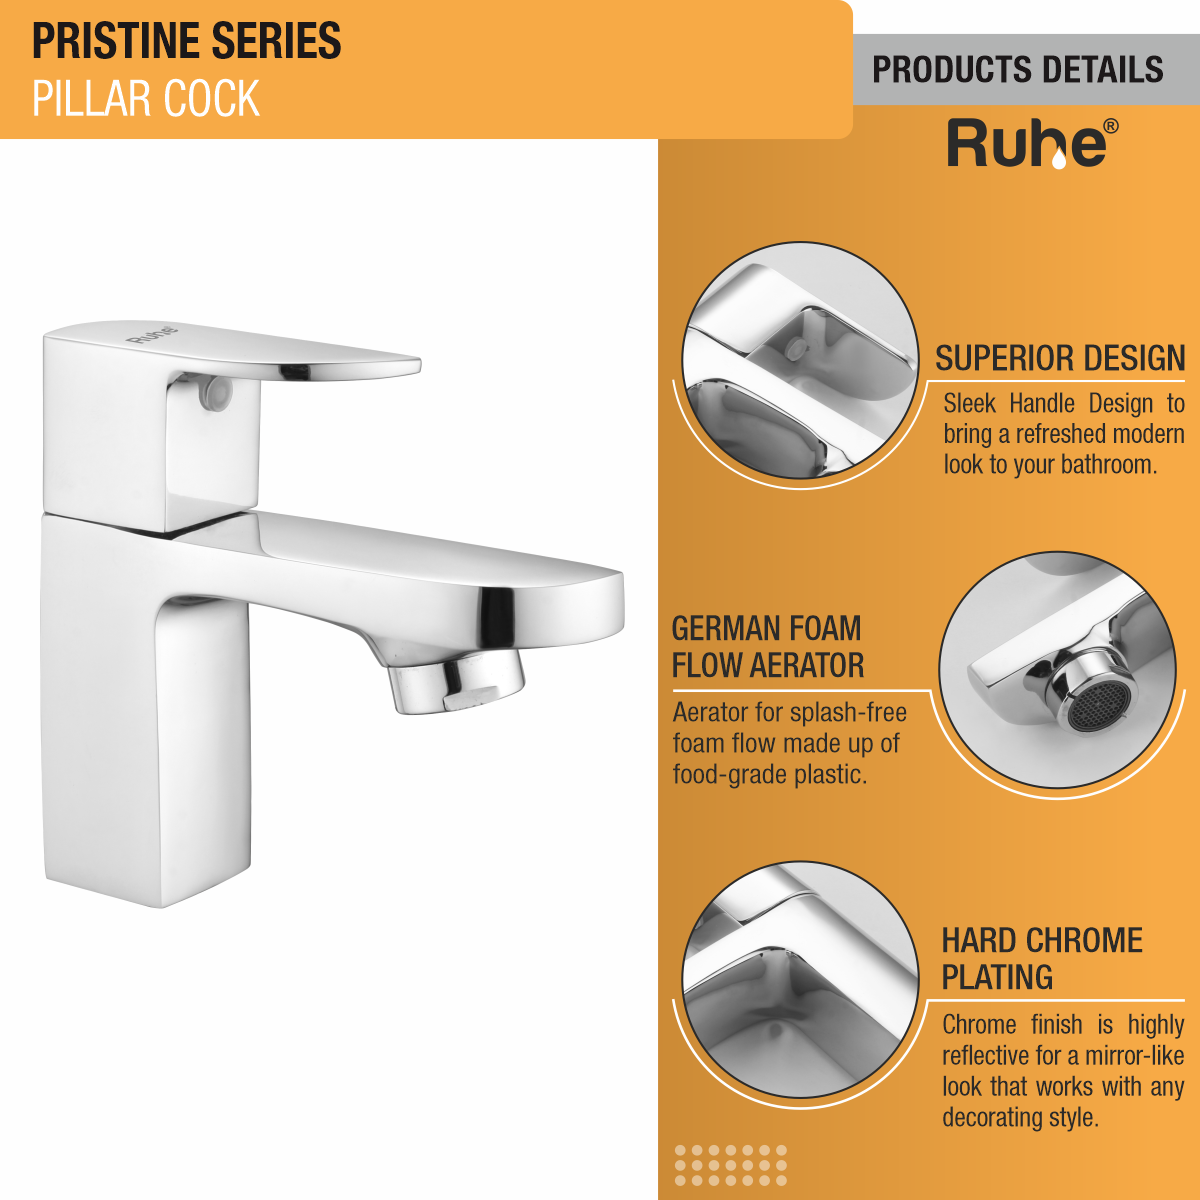 Pristine Pillar Tap Brass Faucet product details